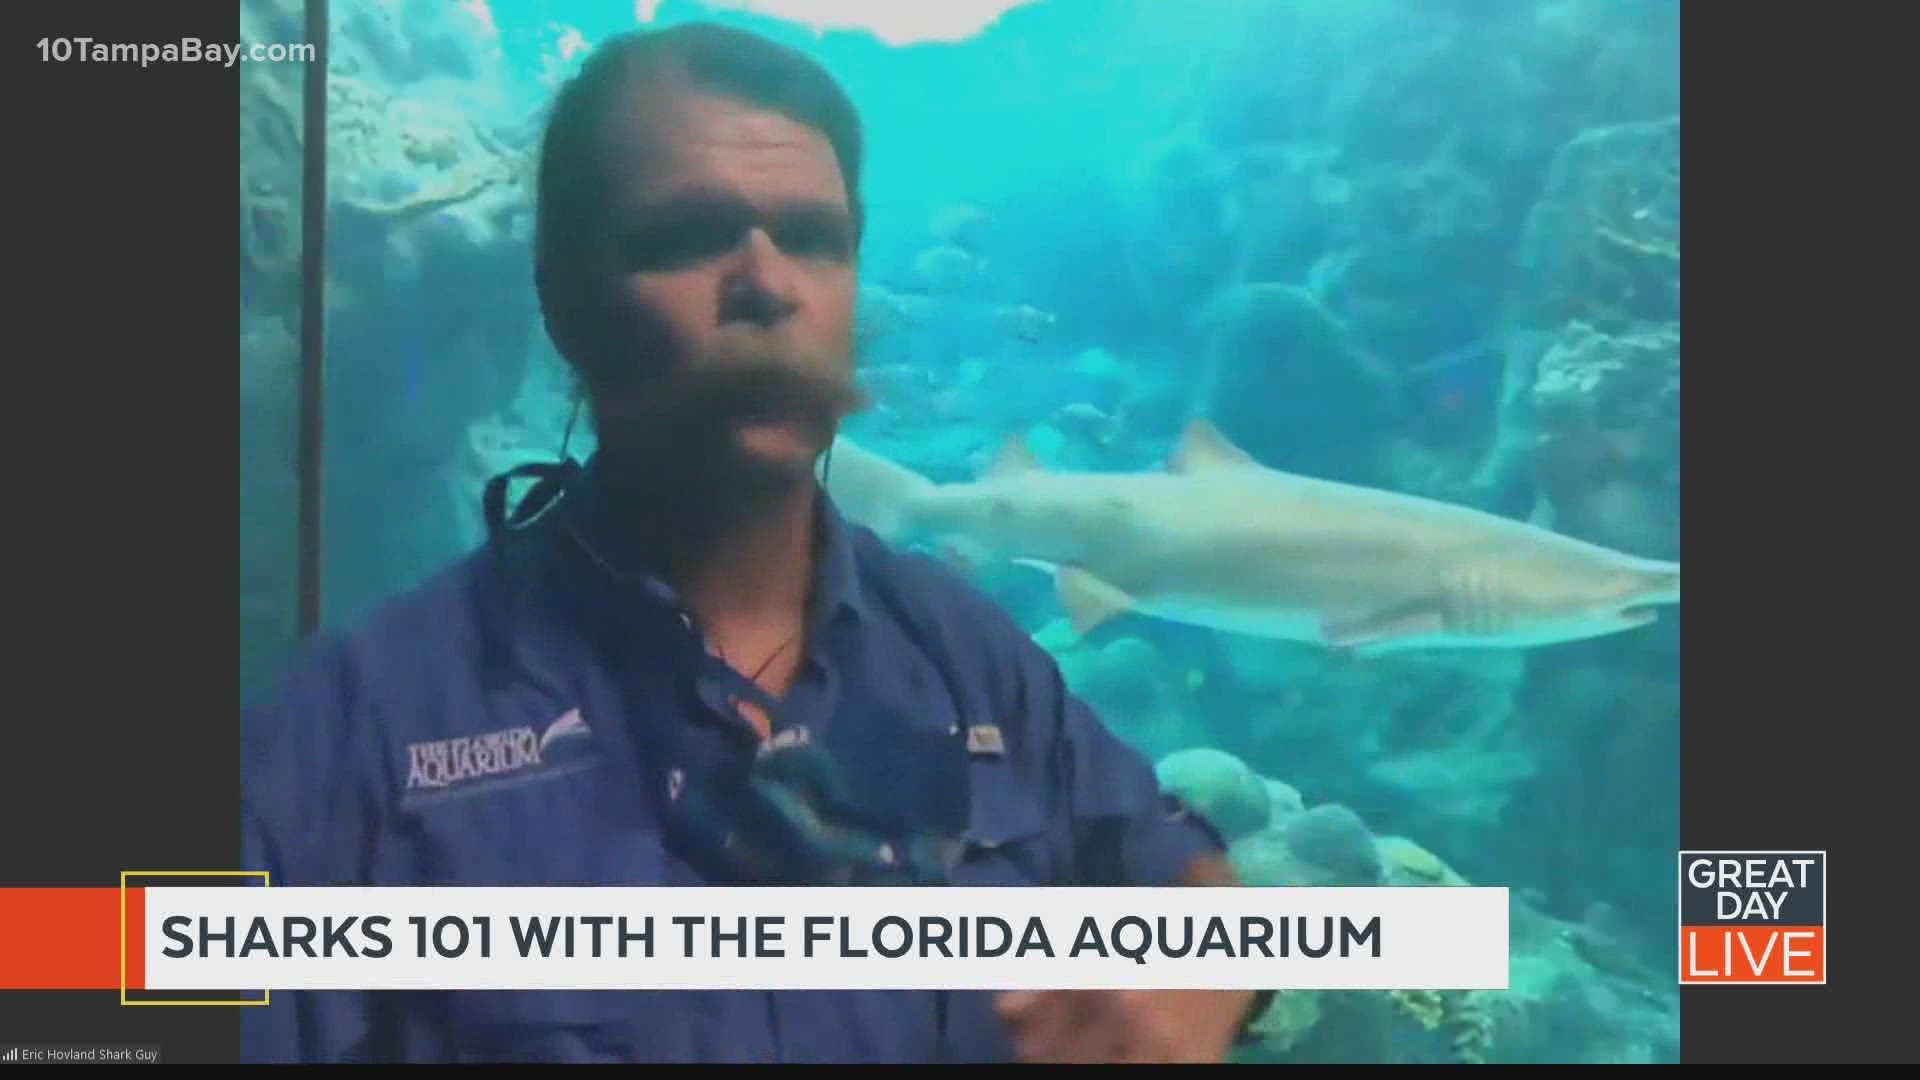 Sharks 101 with the Florida Aquarium